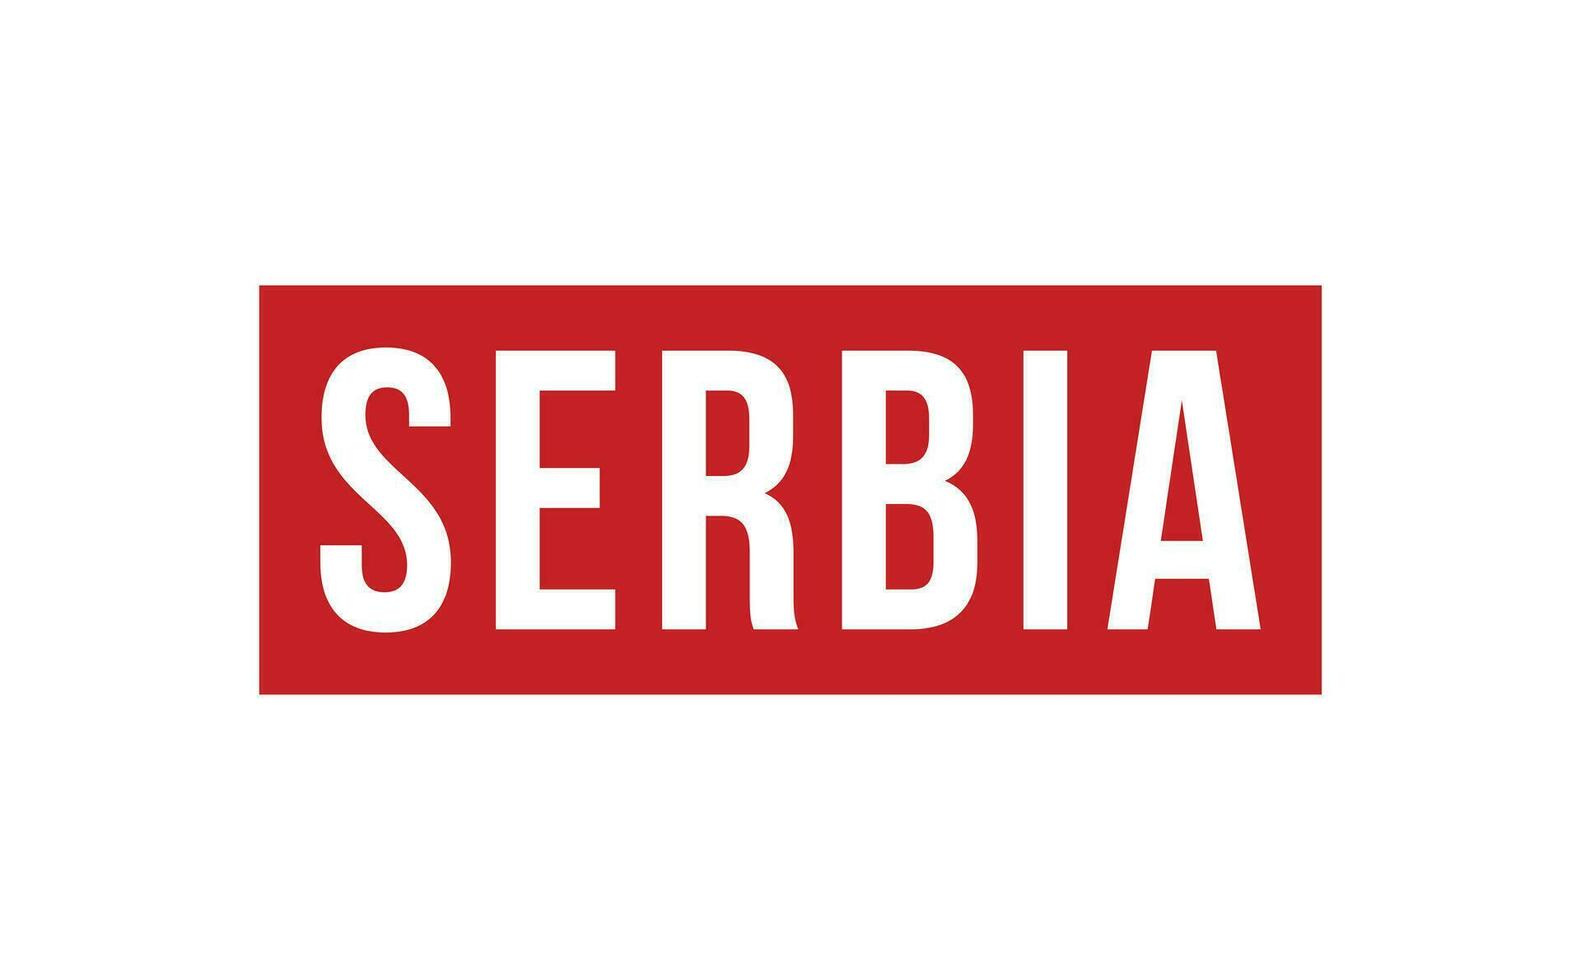 Servië rubber postzegel zegel vector